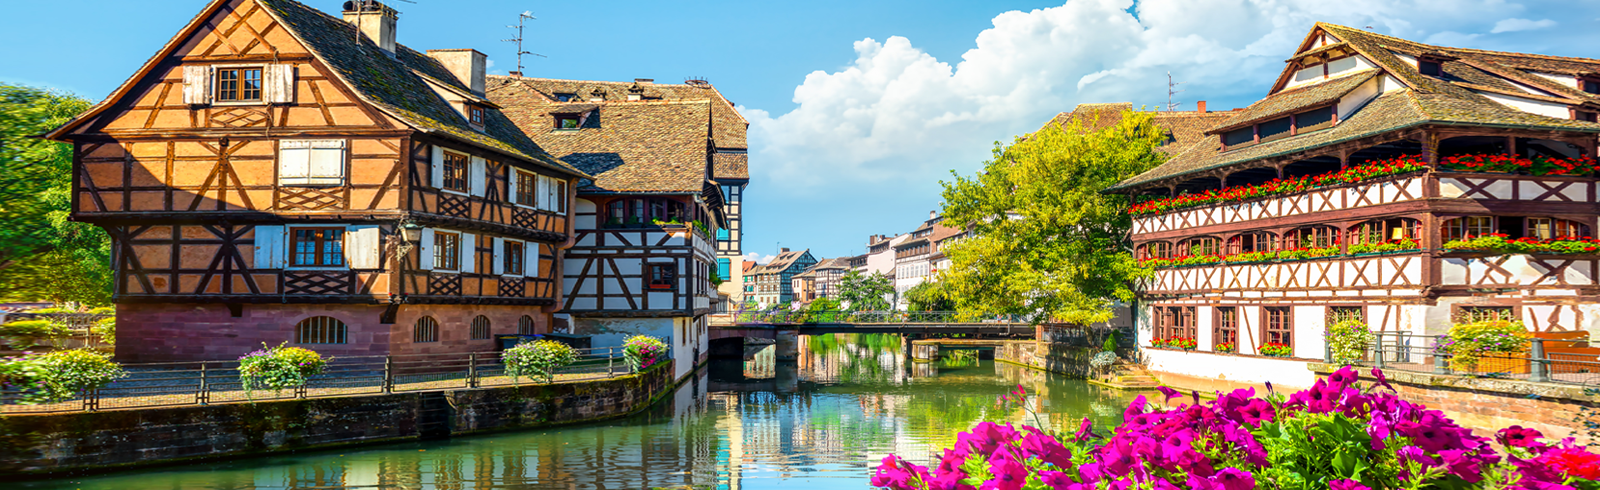 Alsace-Lorraine - Barge Lady